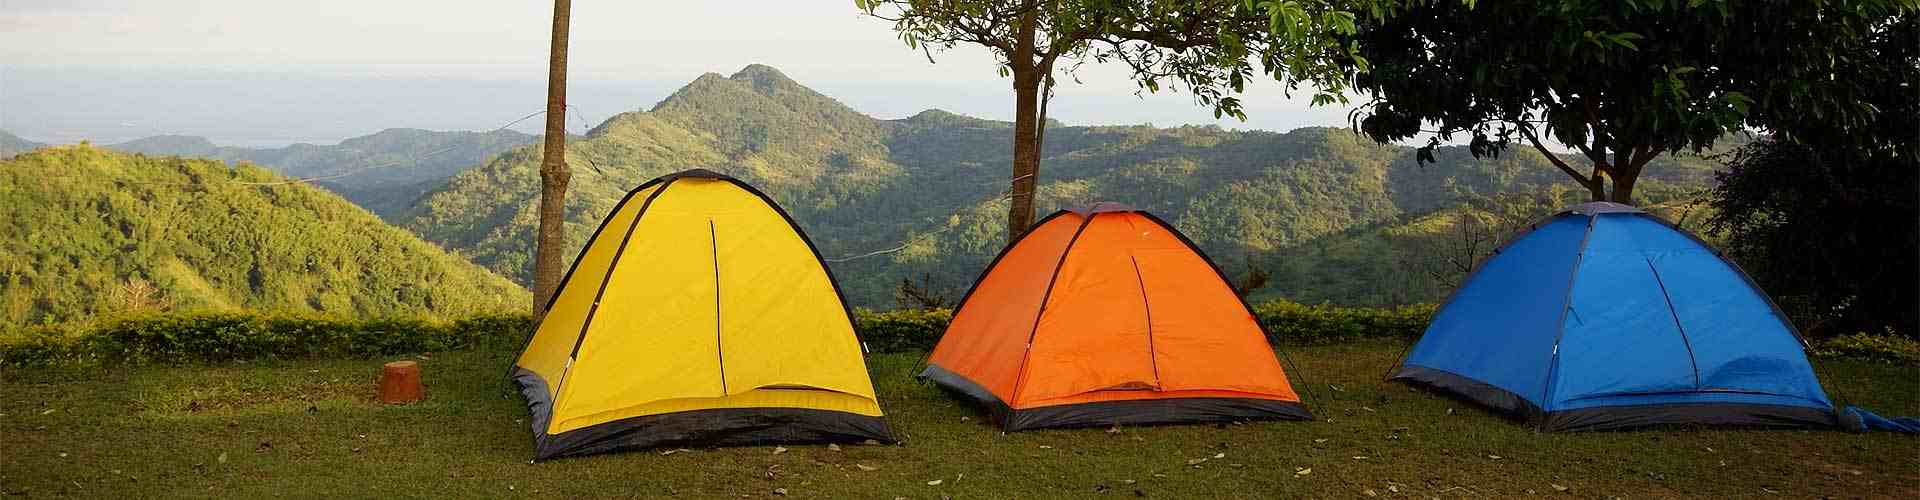 camping o bungalow en Reádegos